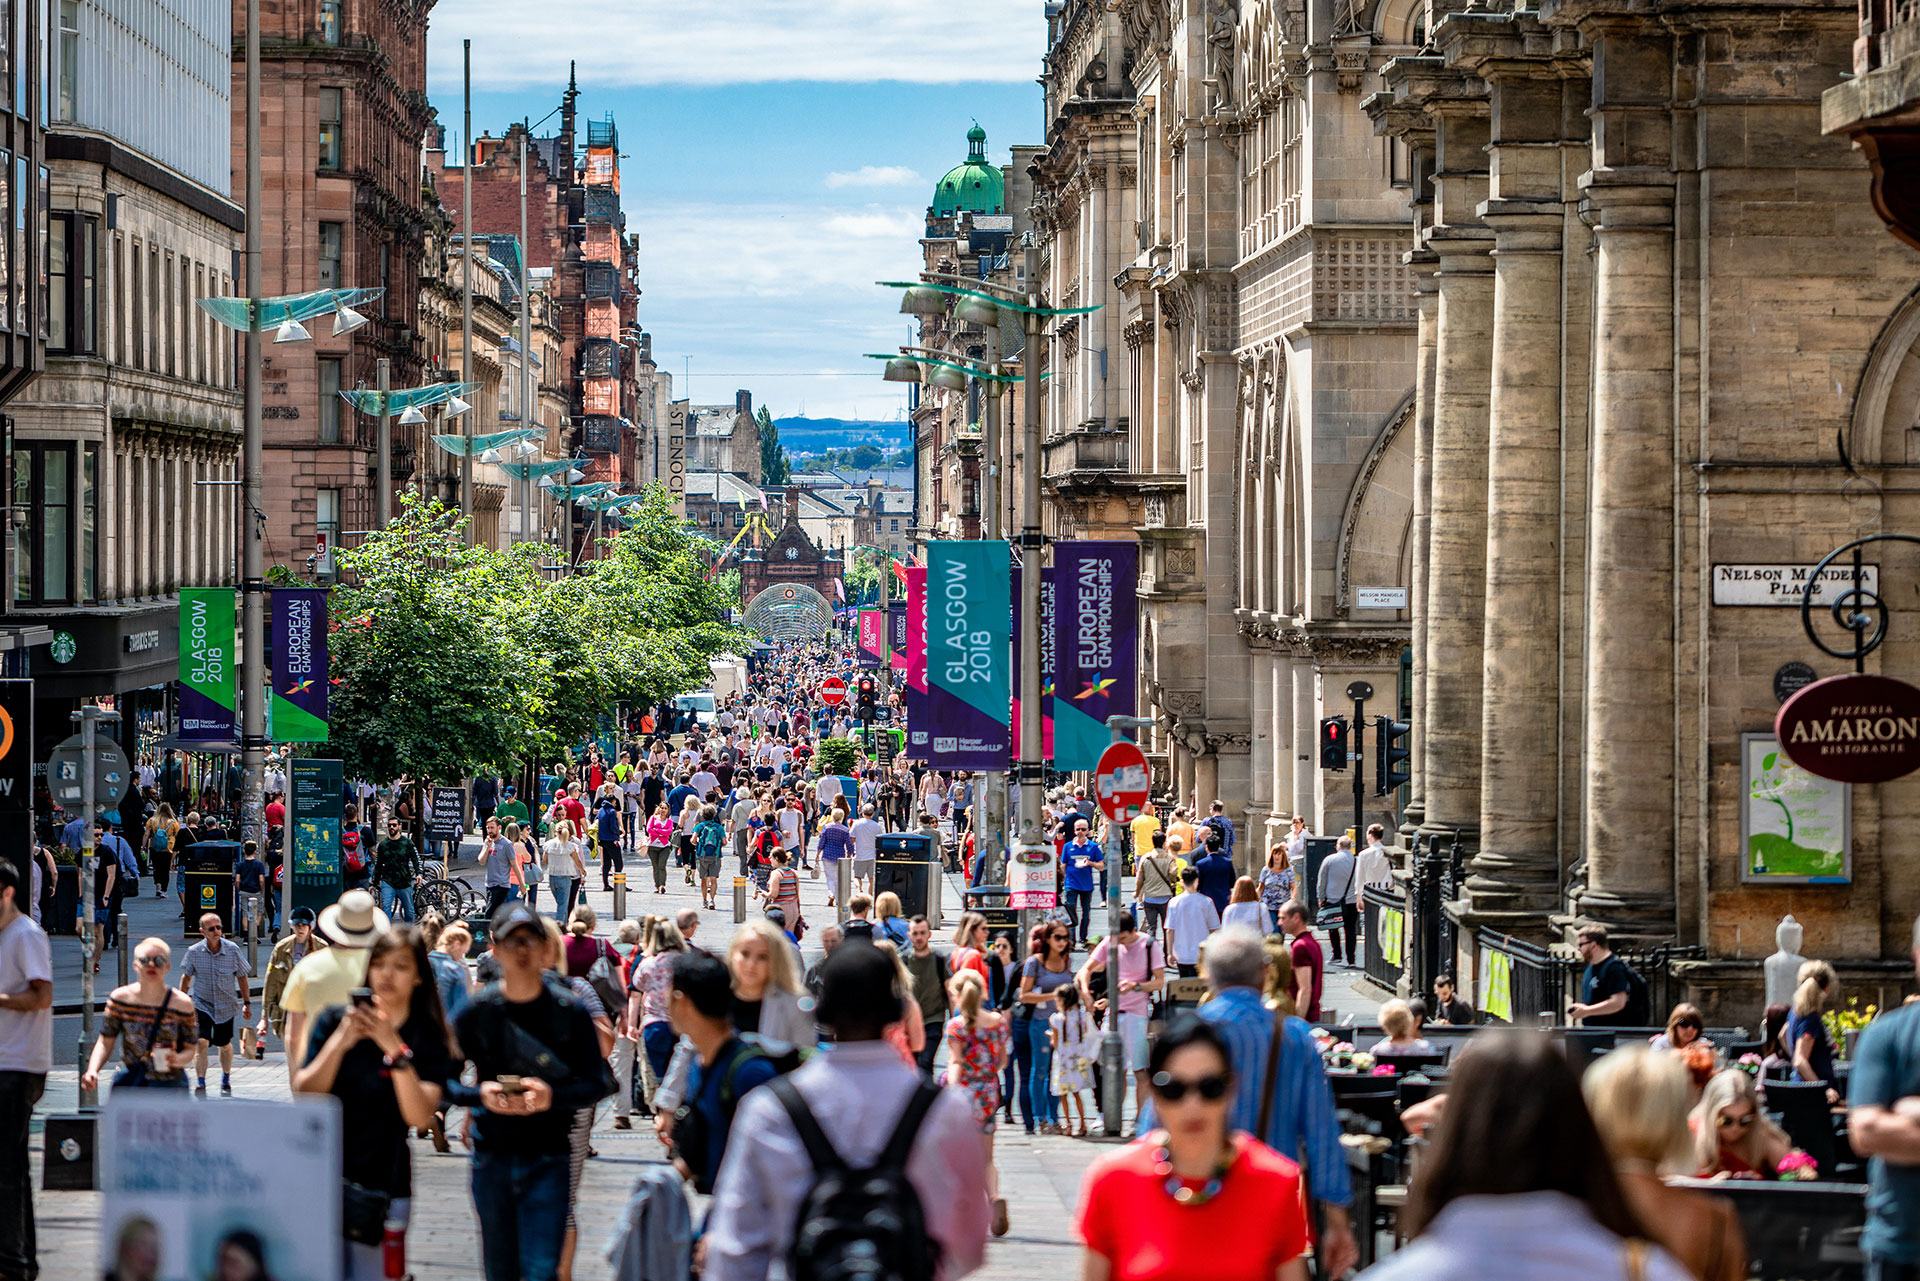 High street in Glasgow